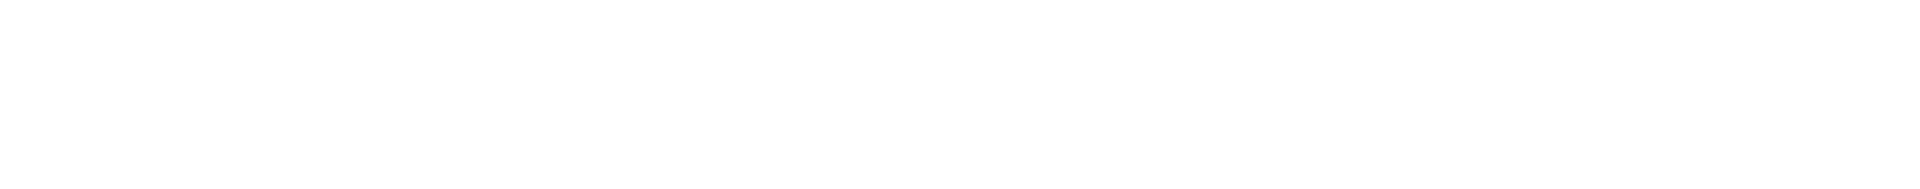 International Chemical Investors Group